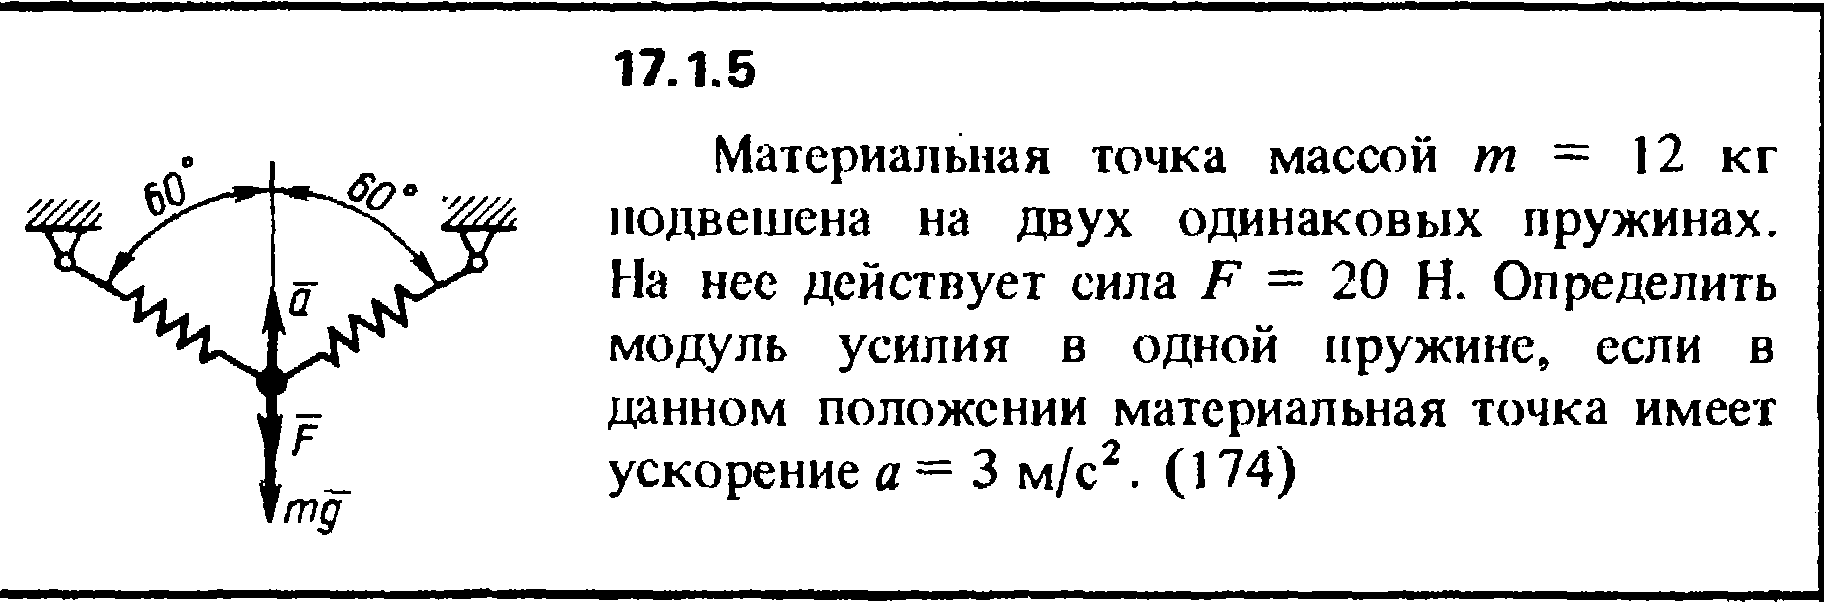 Решение задачи 17.1.5 из сборника Кепе О.Е. 1989 года